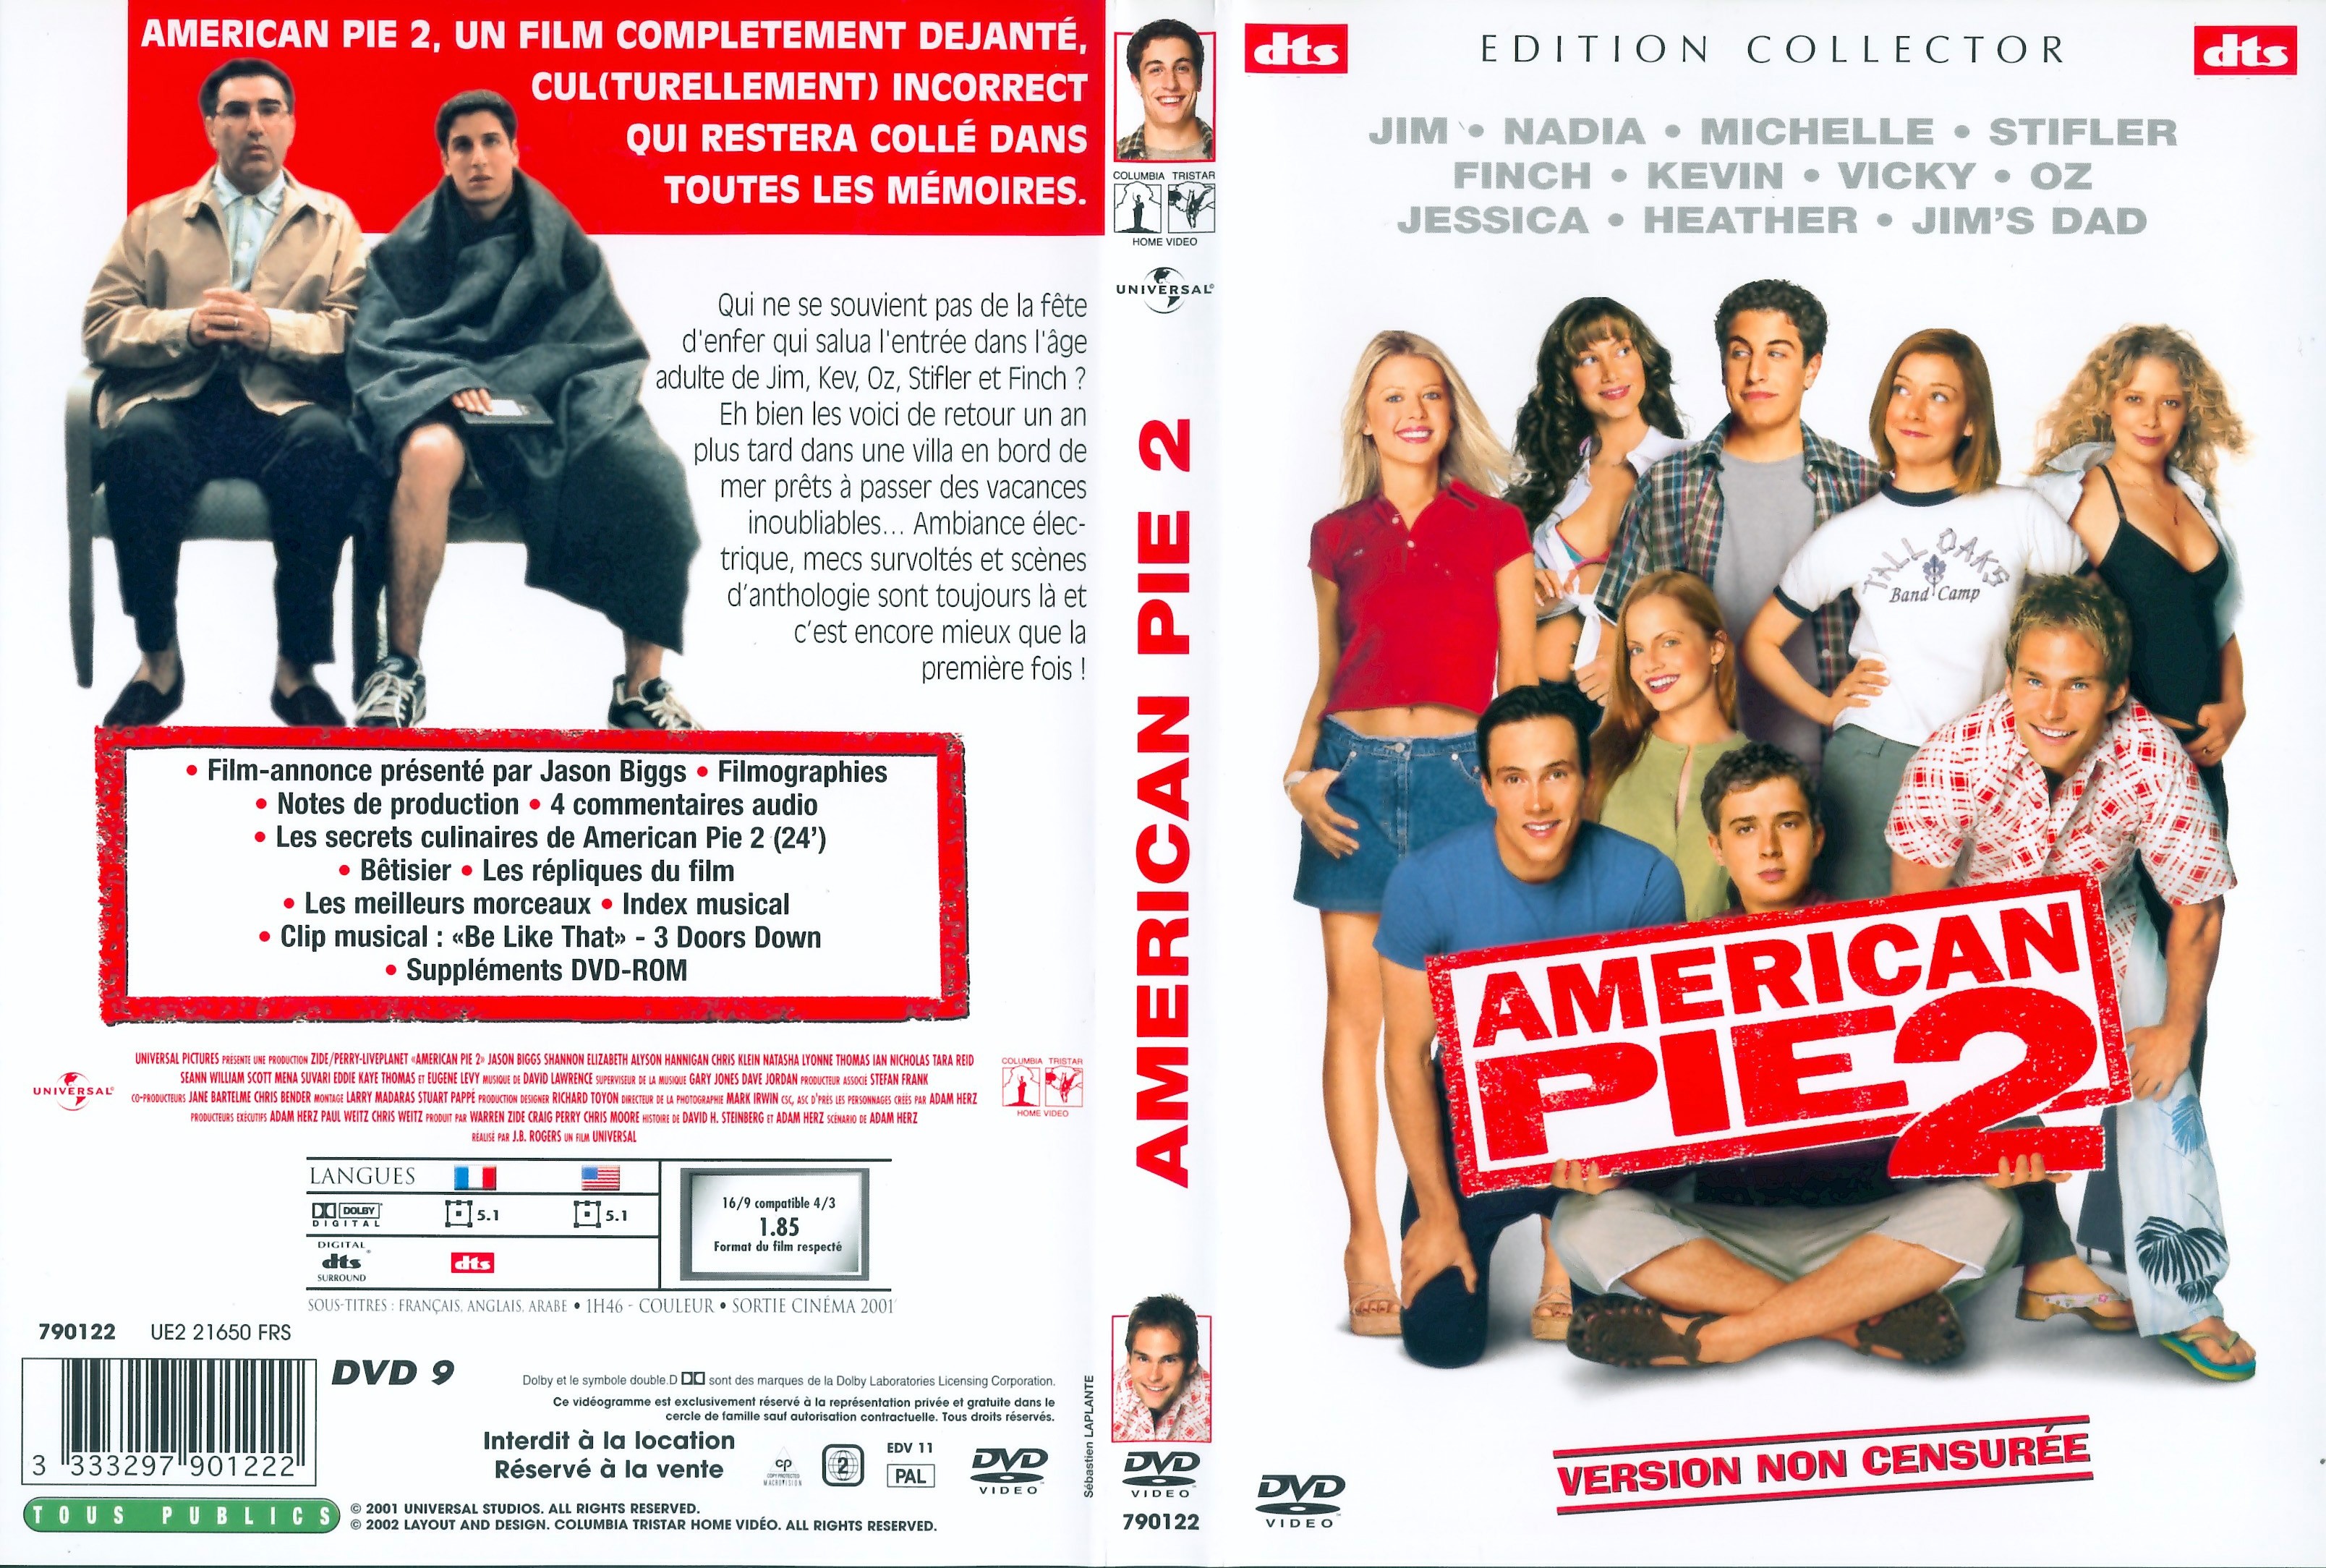 Jaquette DVD American pie 2